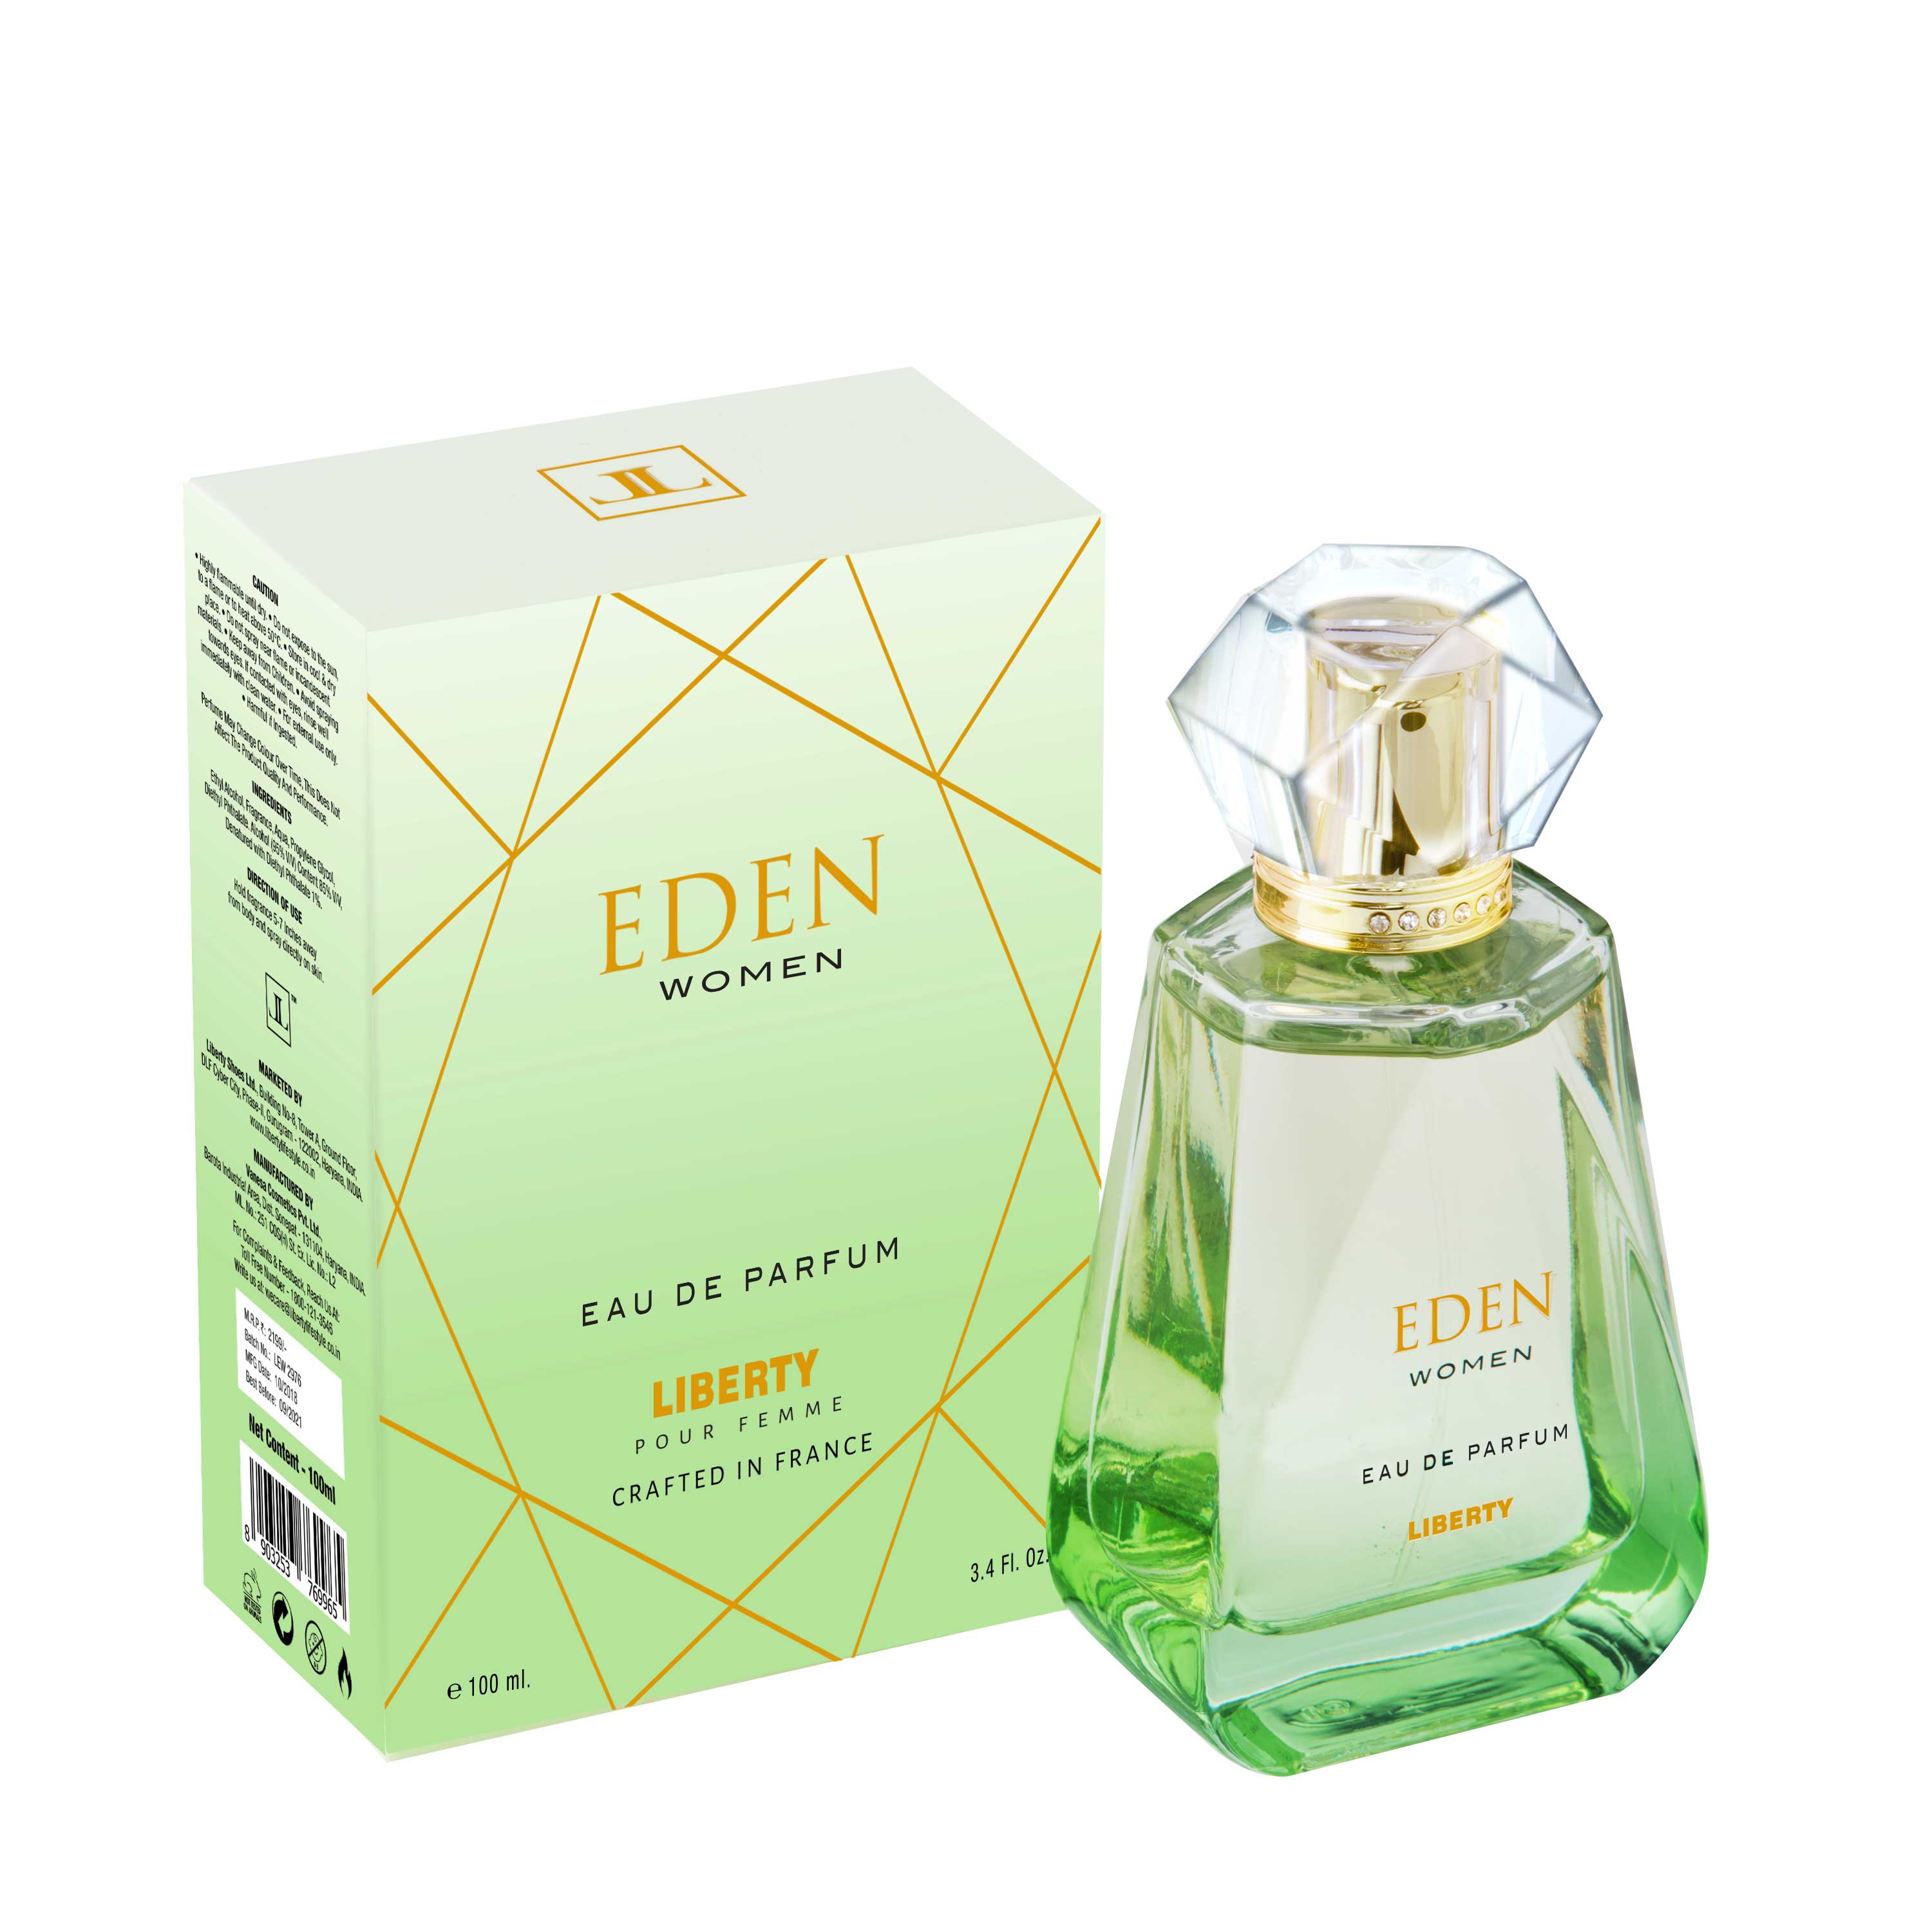 EDEN WOMEN - Eau De Perfume from LIBERTY LIFESTYLE